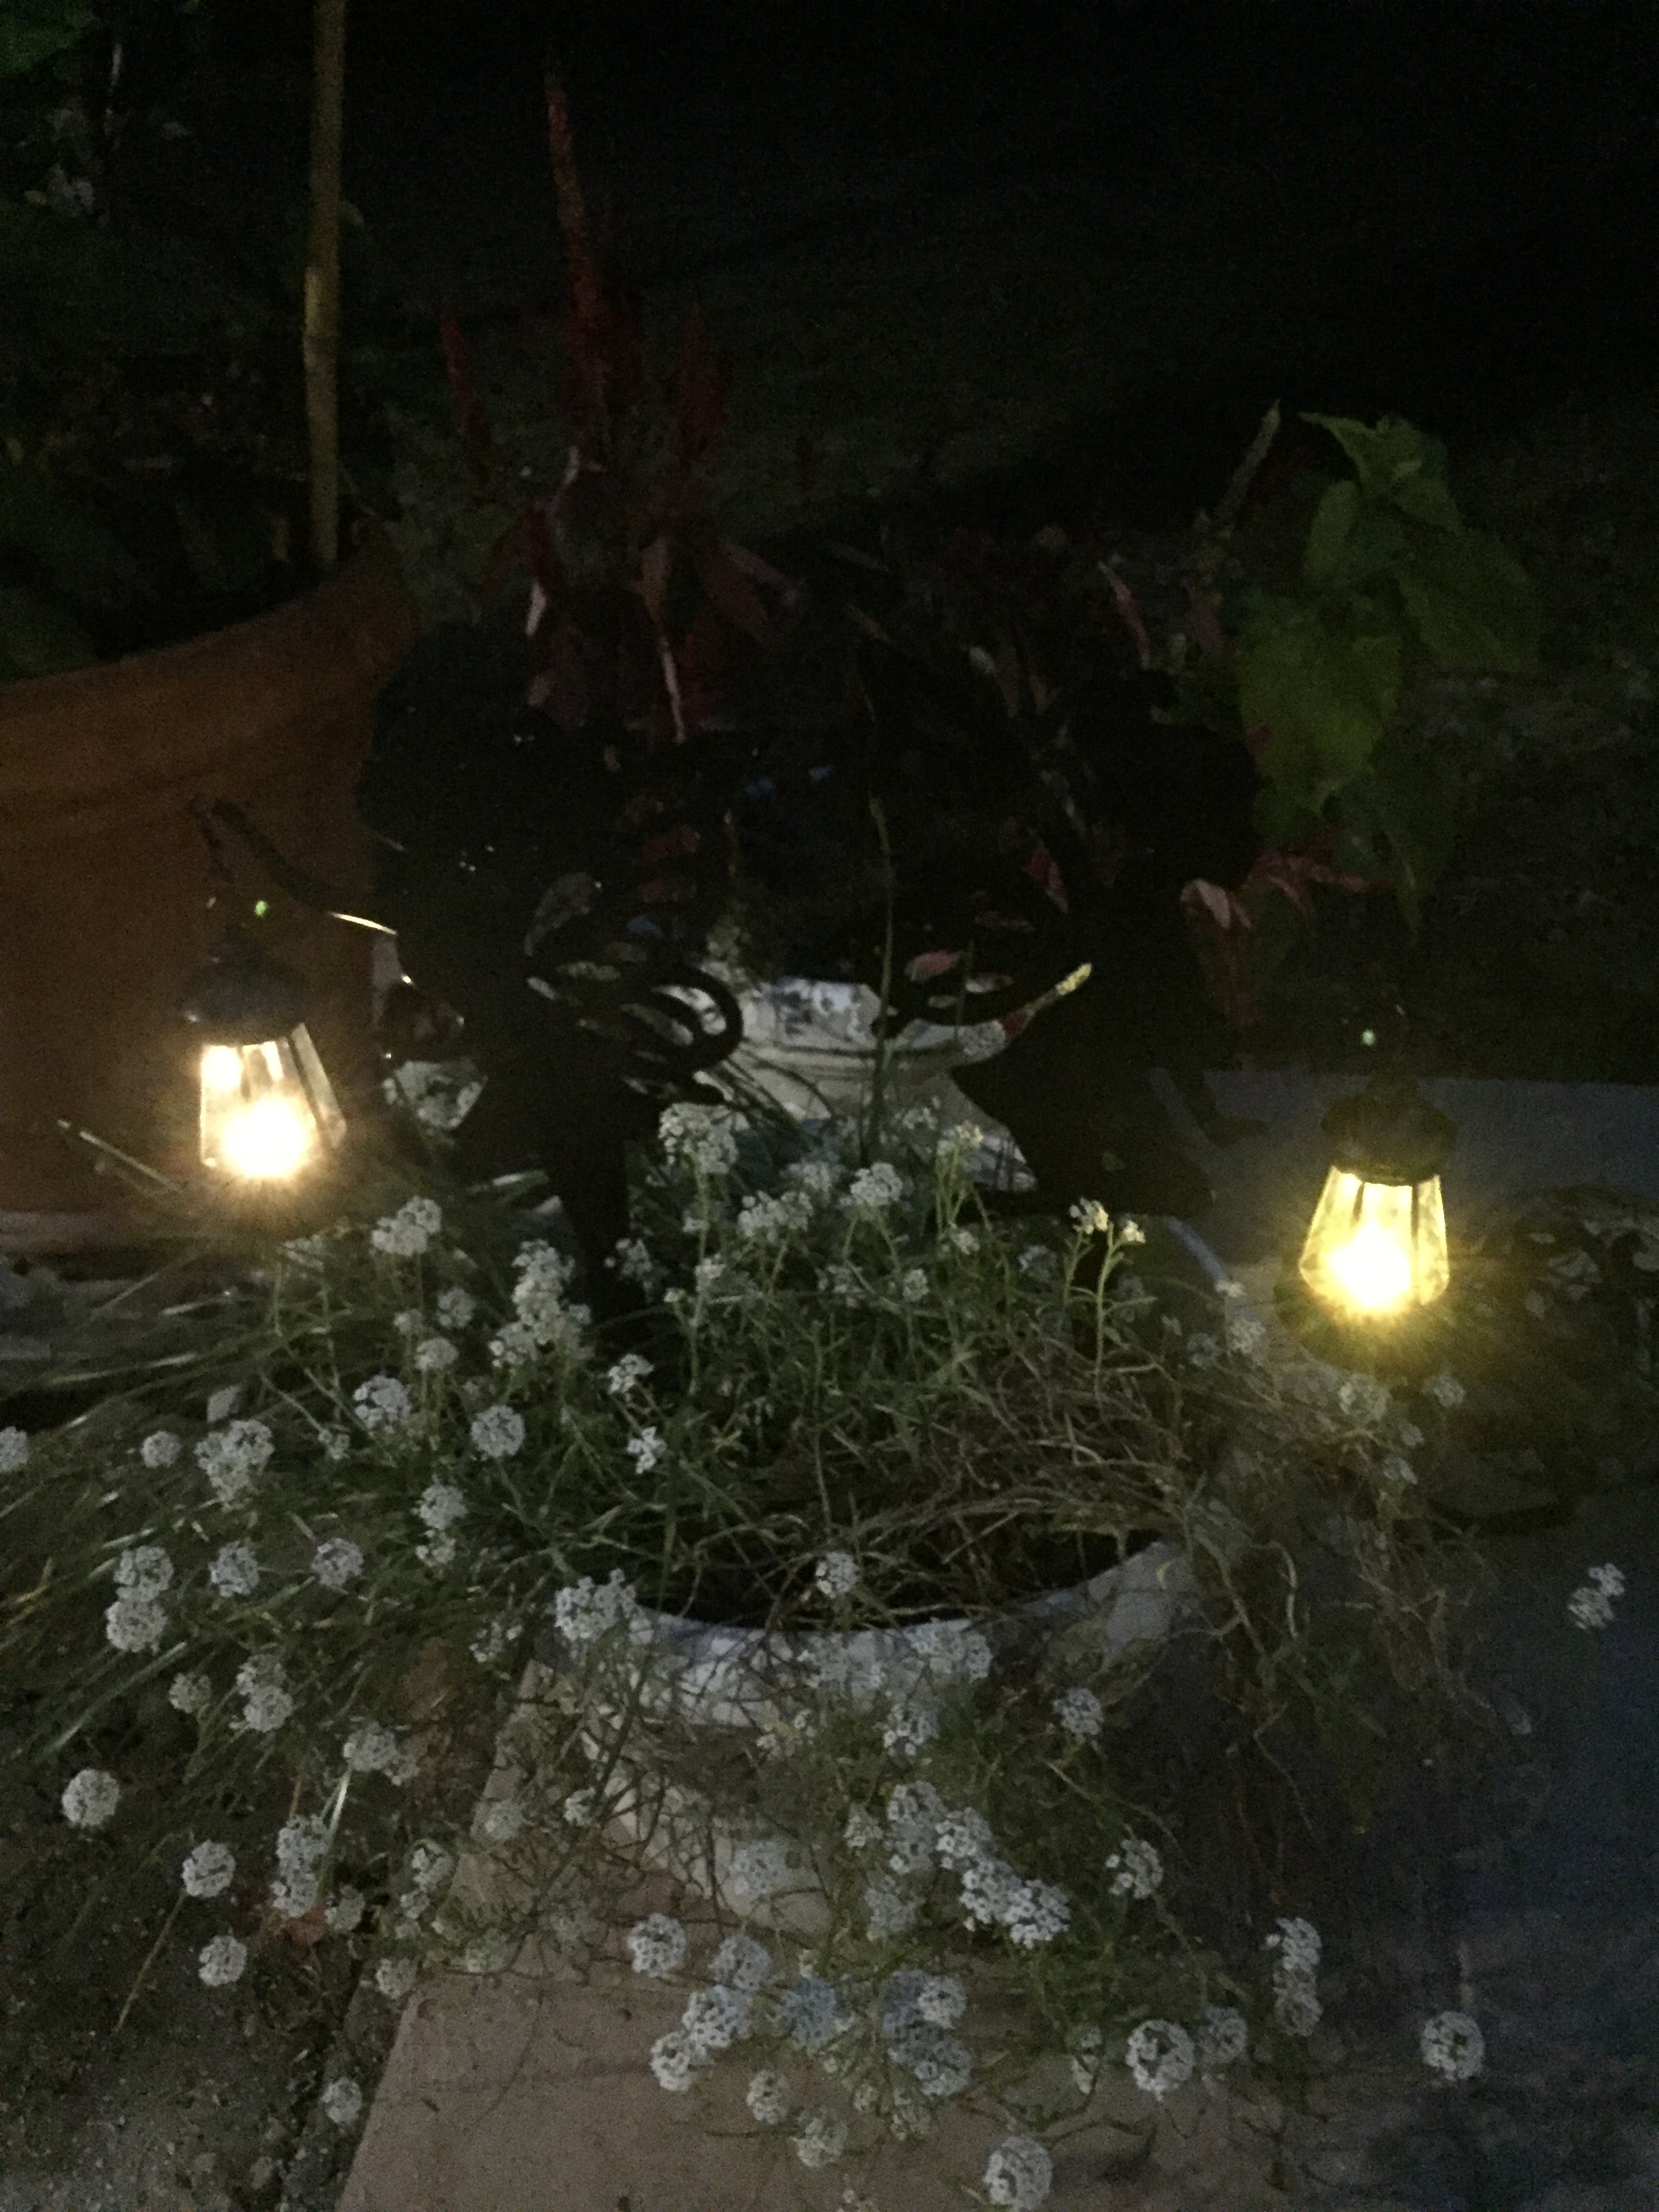 Solar Fairy Light Outdoor Garden Angel Lantern Lamp 21" in Iron/ABS Waterproof Led Solar light for Patio Gate Yard Wedding.